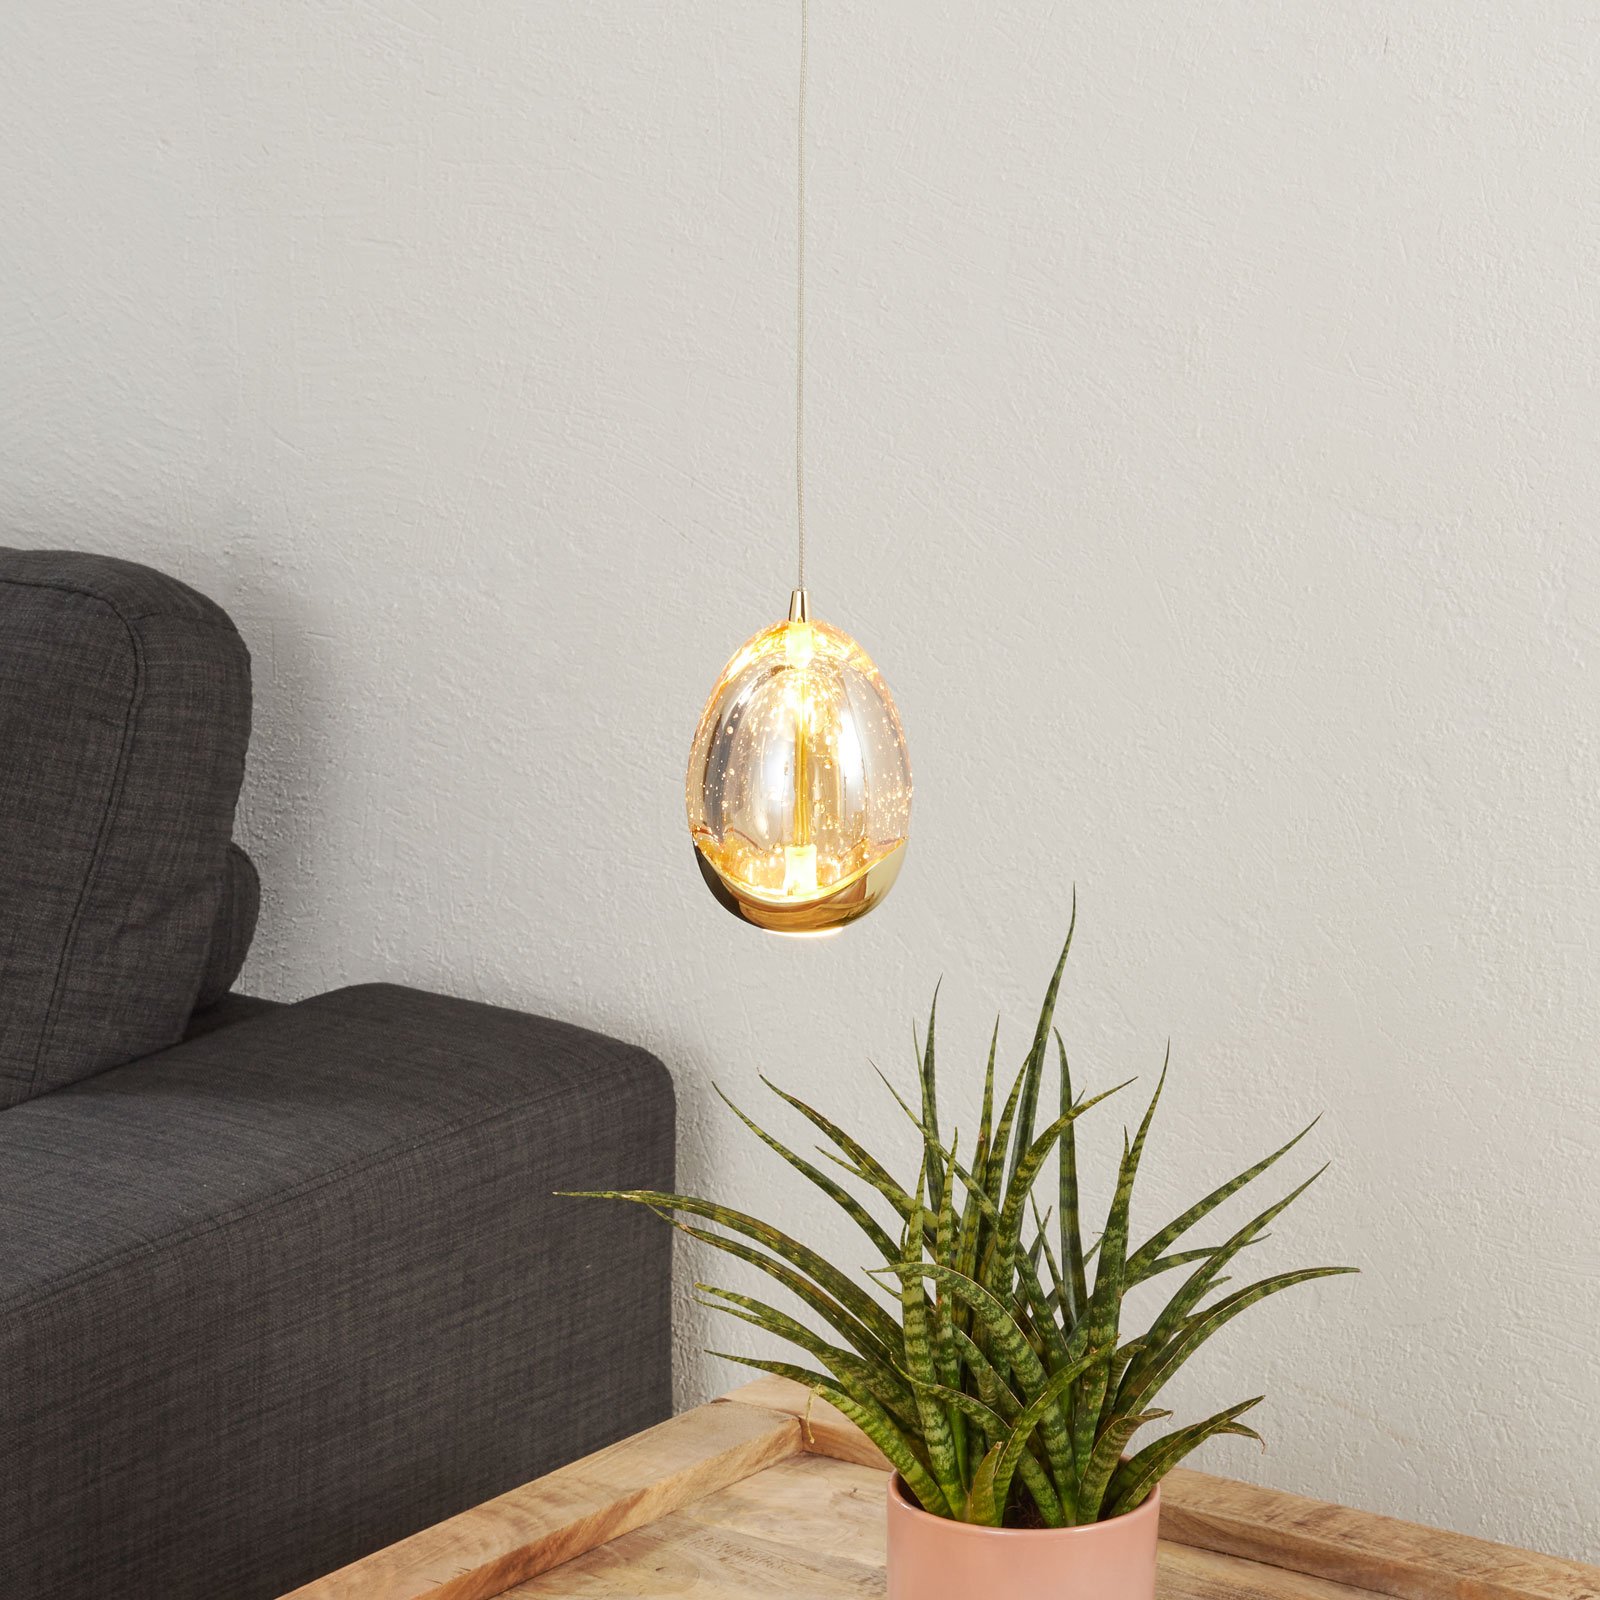 1-light LED hanging light Rocio in gold finish